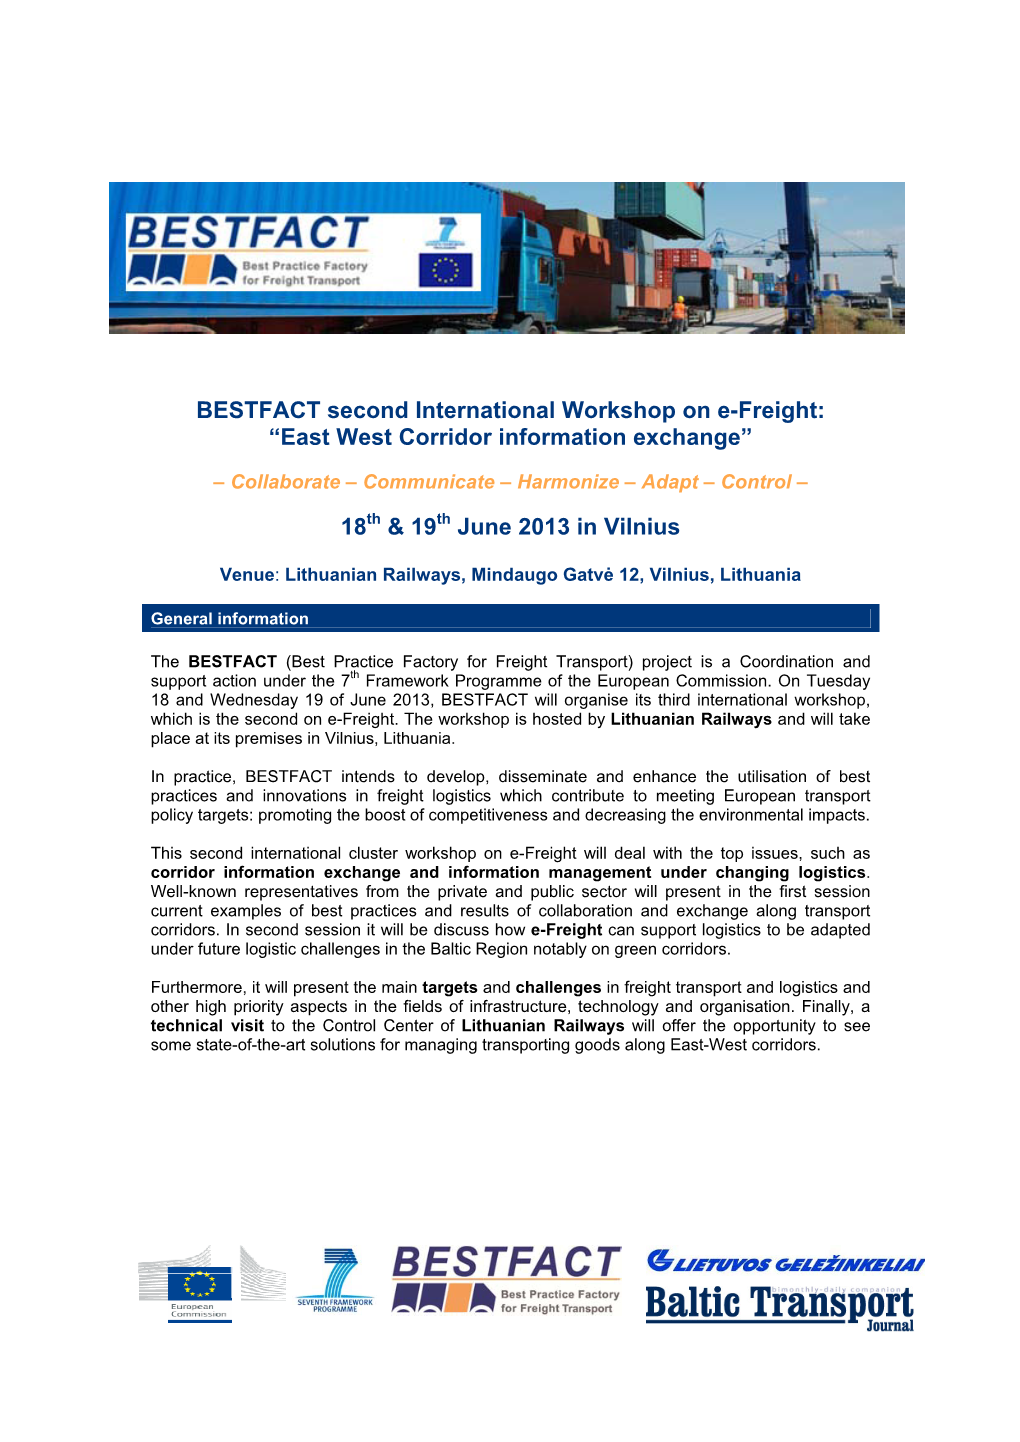 BESTFACT Second International Workshop on E-Freight: “East West Corridor Information Exchange”